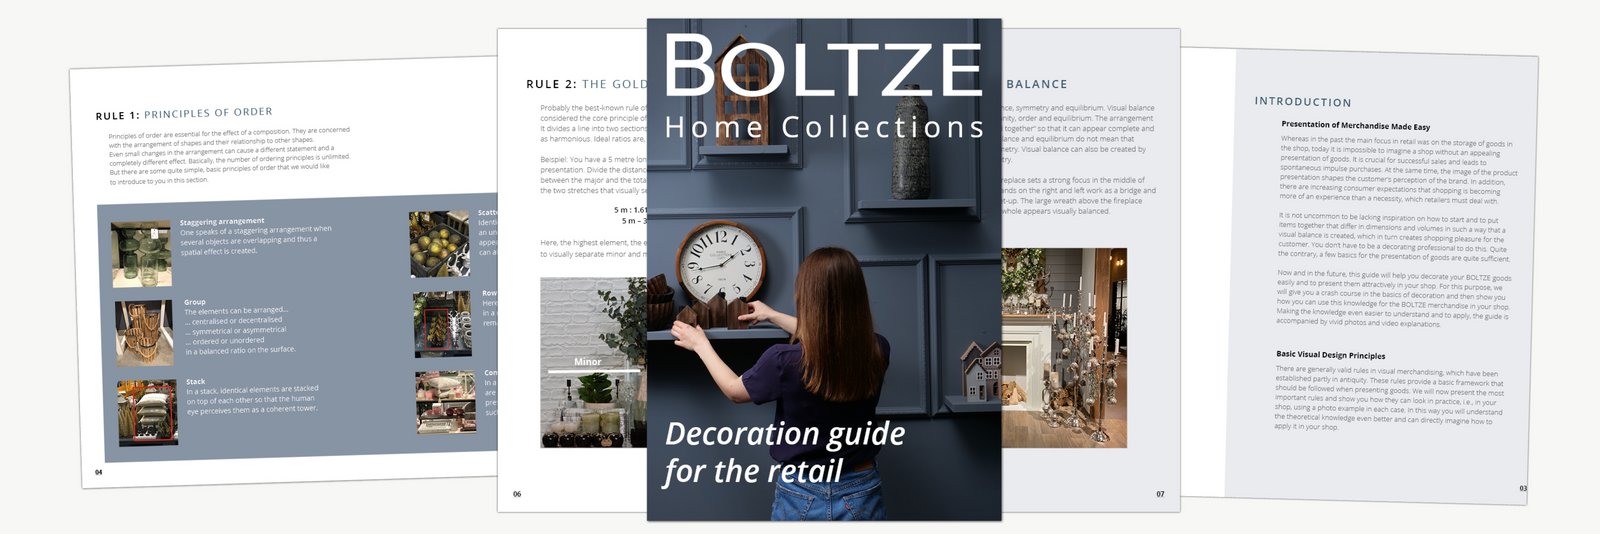 Boltze Home Collections Online Shop